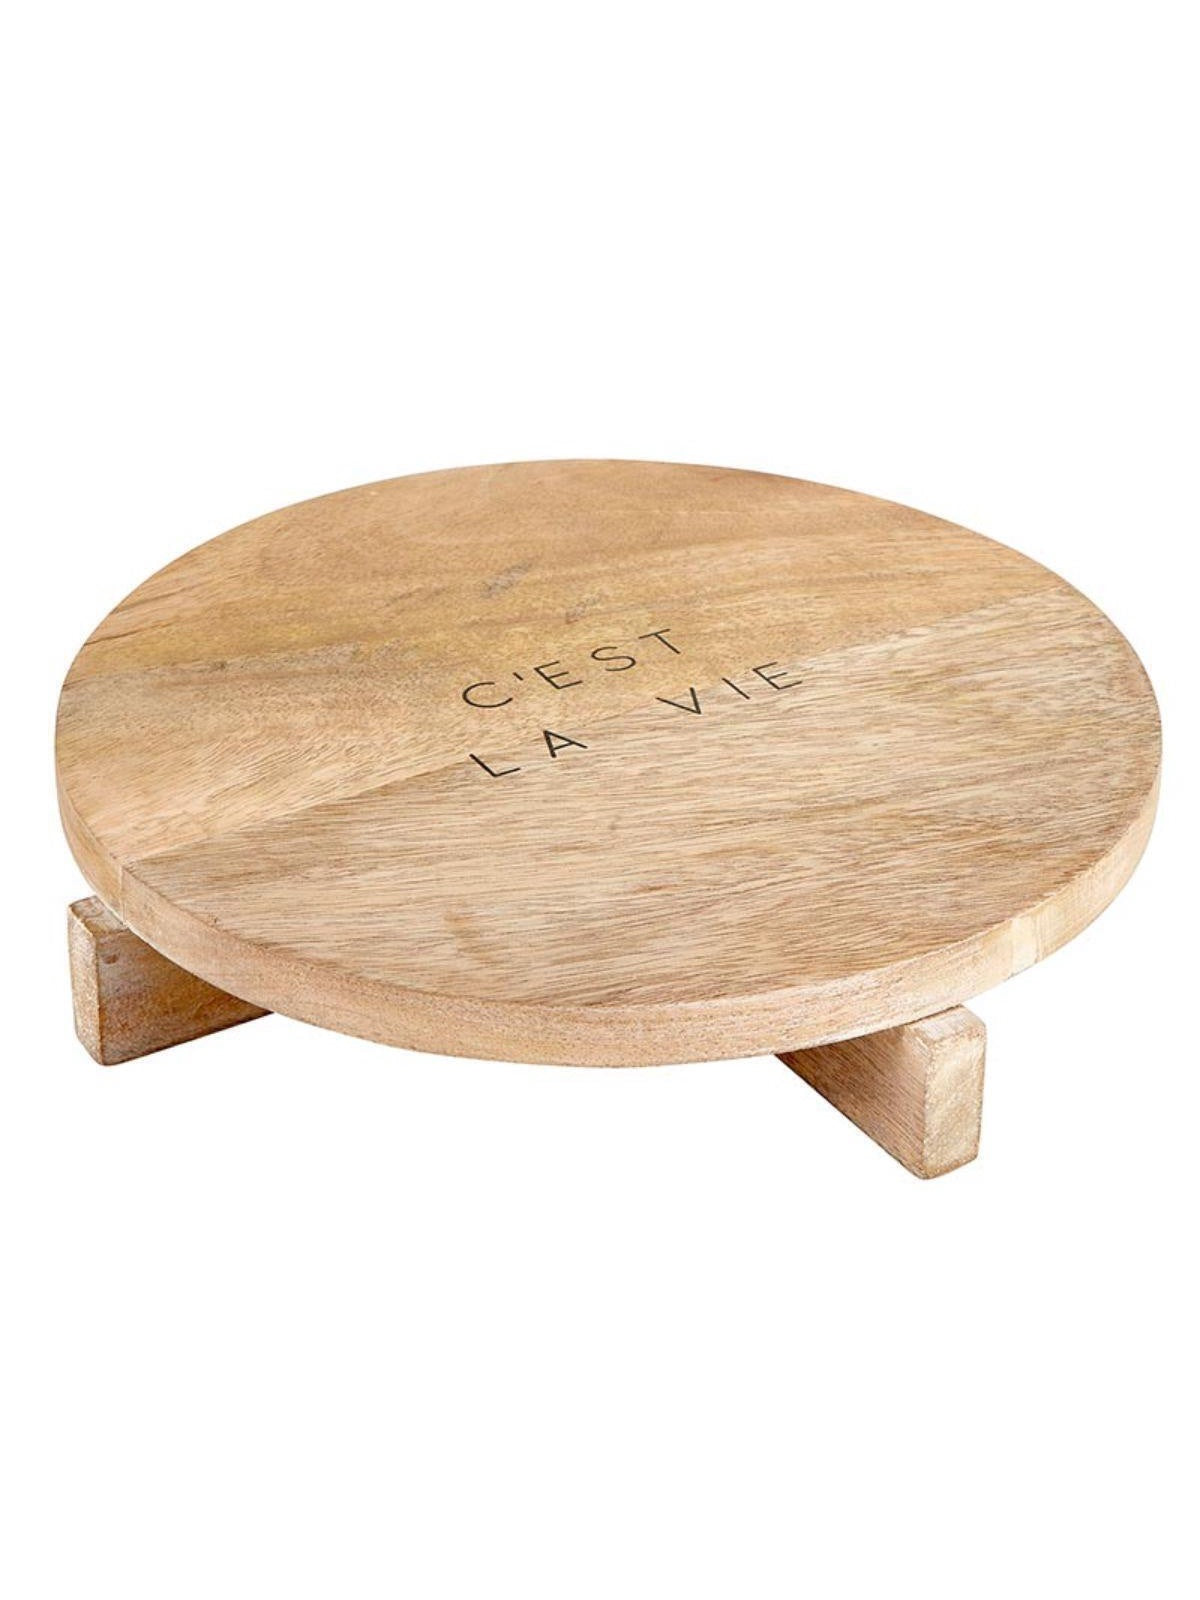 Mango Wood Round Pedestal Cheese Board With C'est La Vie Print, Sideview.